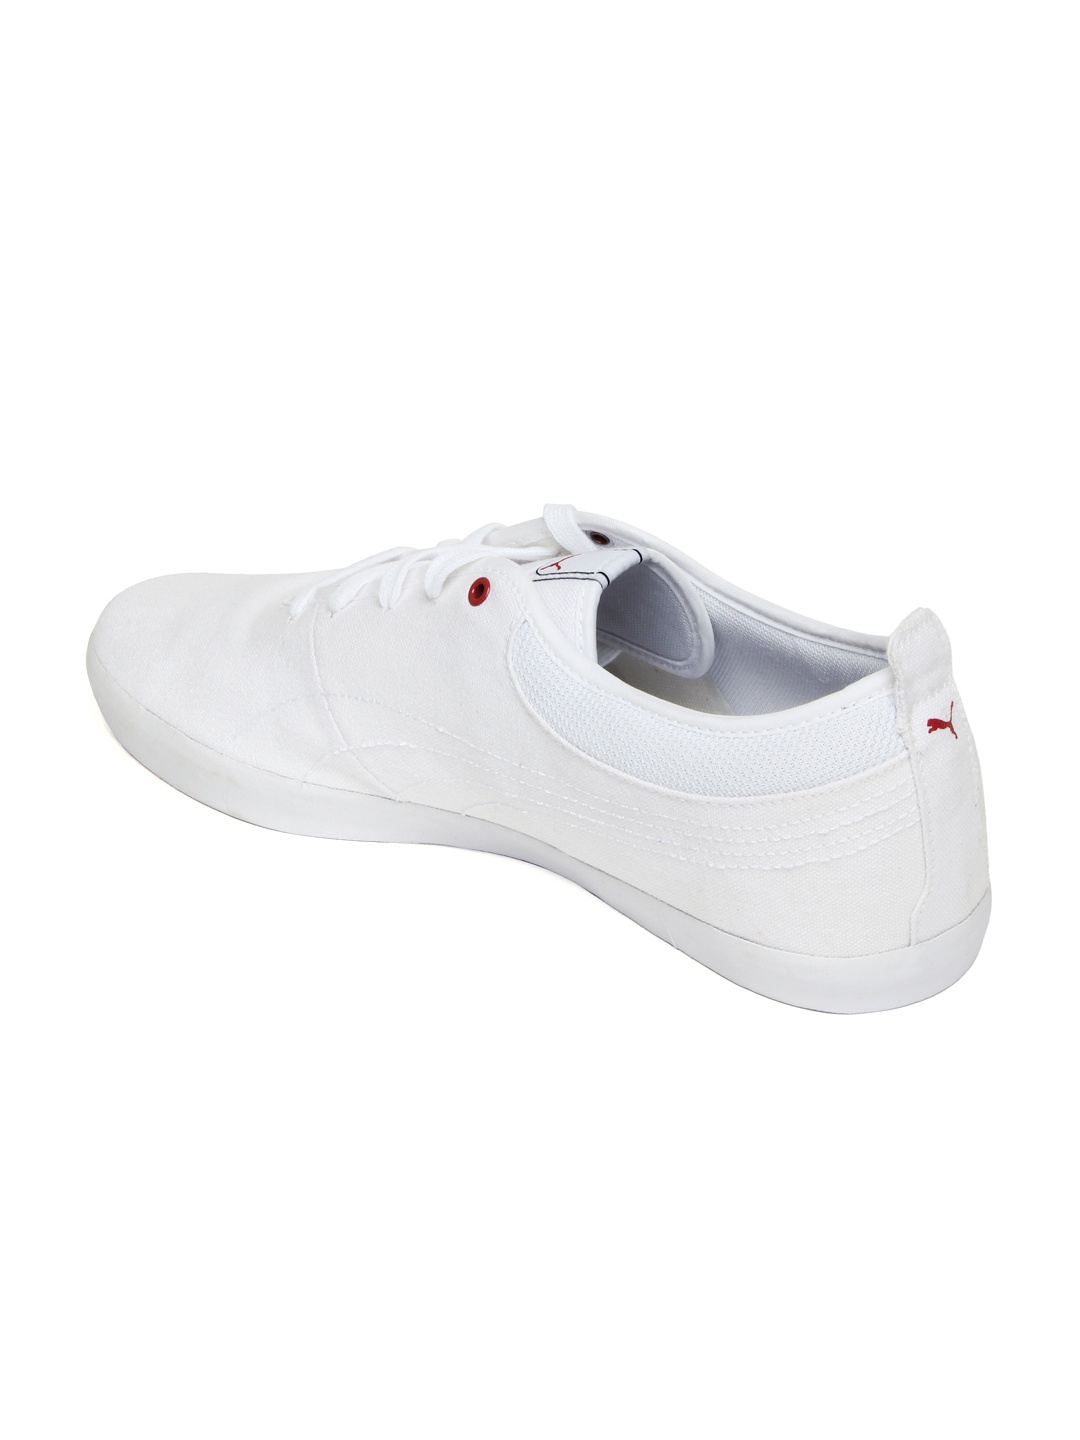 puma white canvas shoes